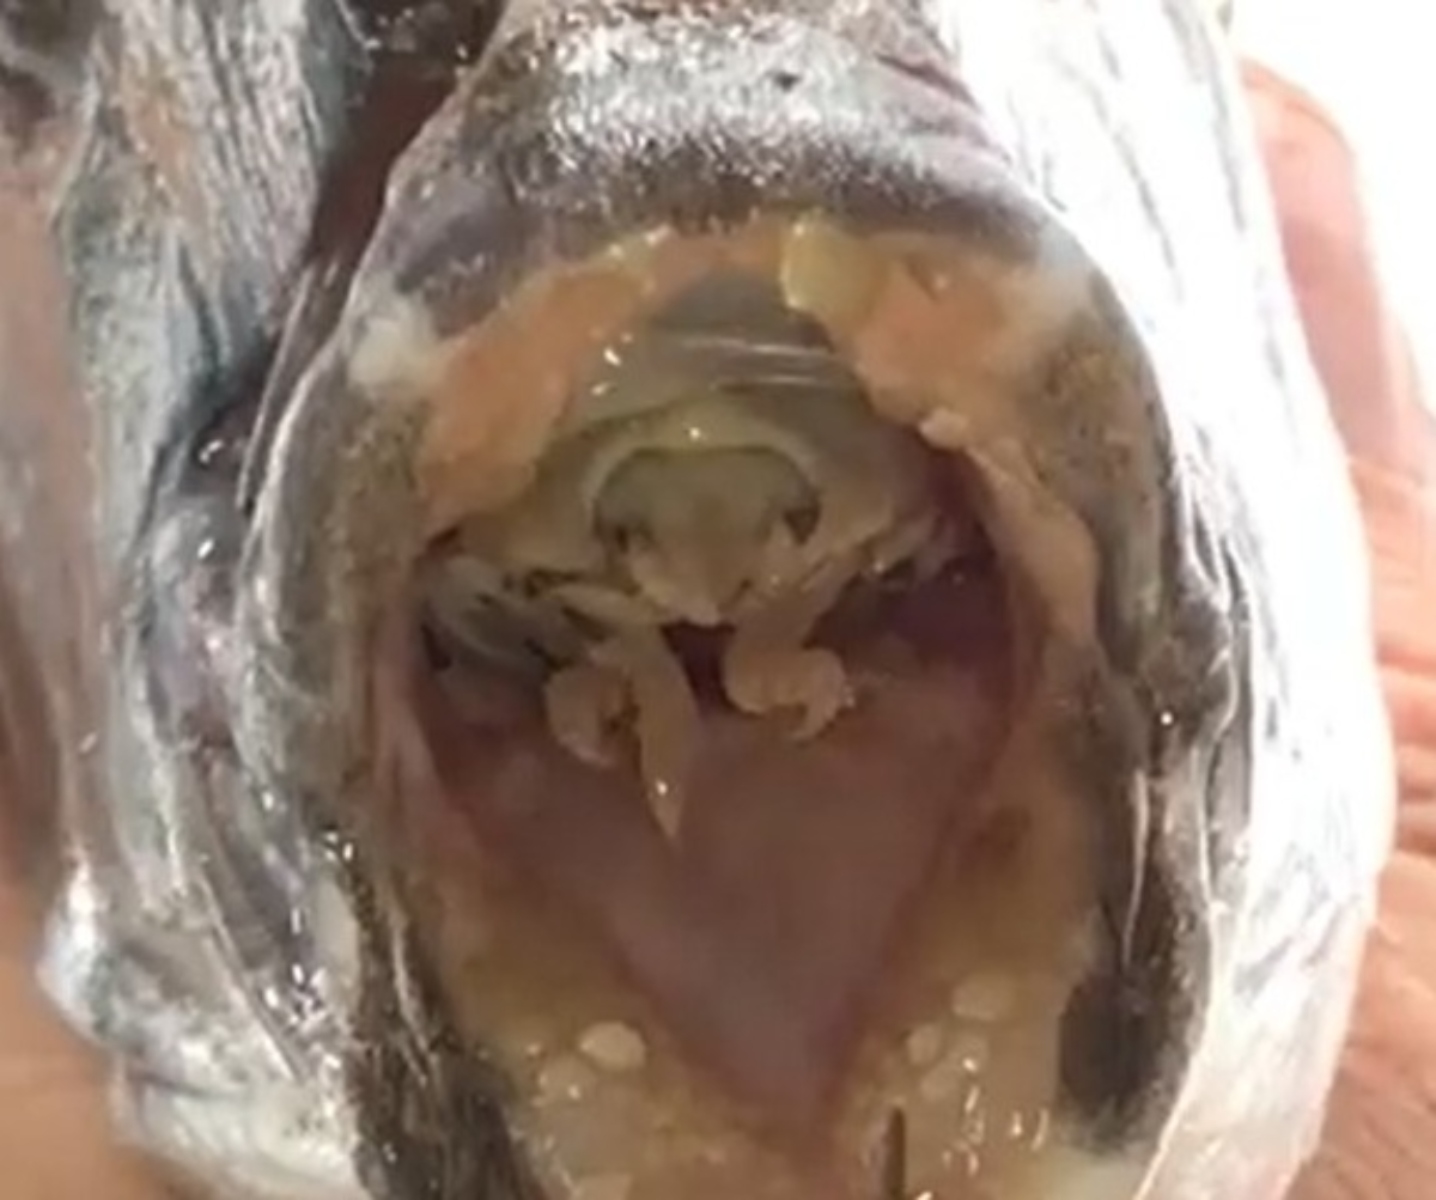  Imagem assustadora de peixe com 'alienígena' na boca viraliza na web 